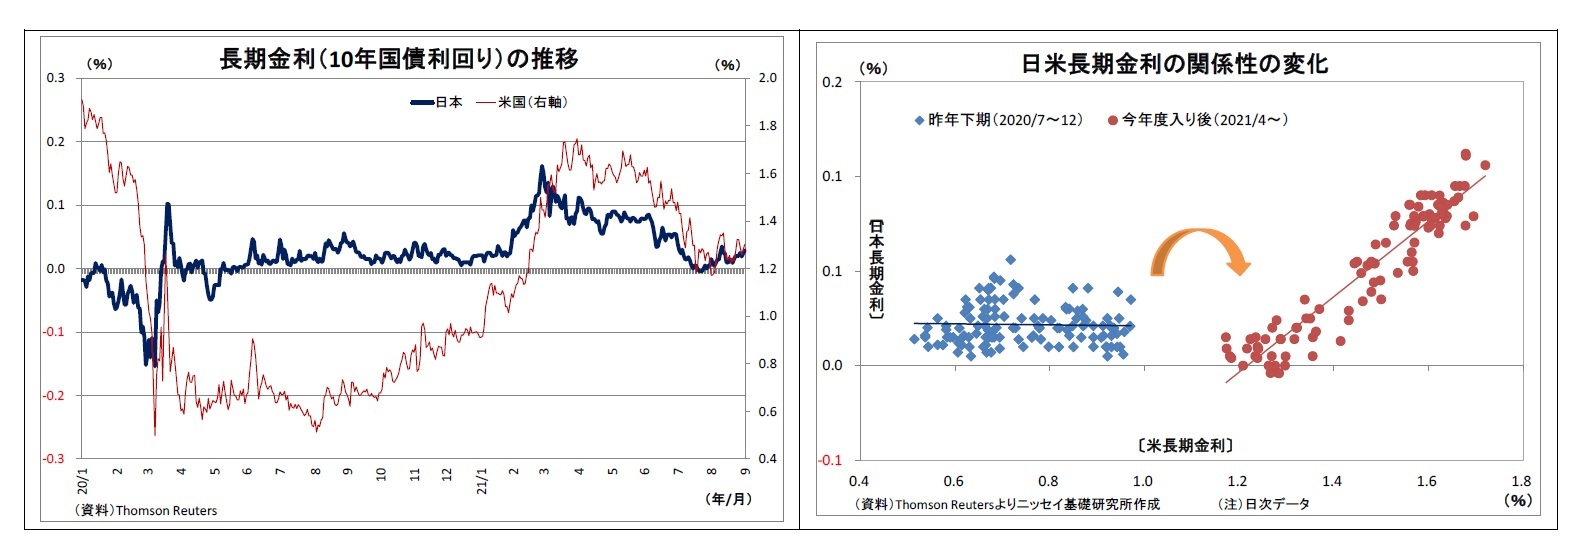 長期金利（10年国債利回り）の推移/日米長期金利の関係性の変化